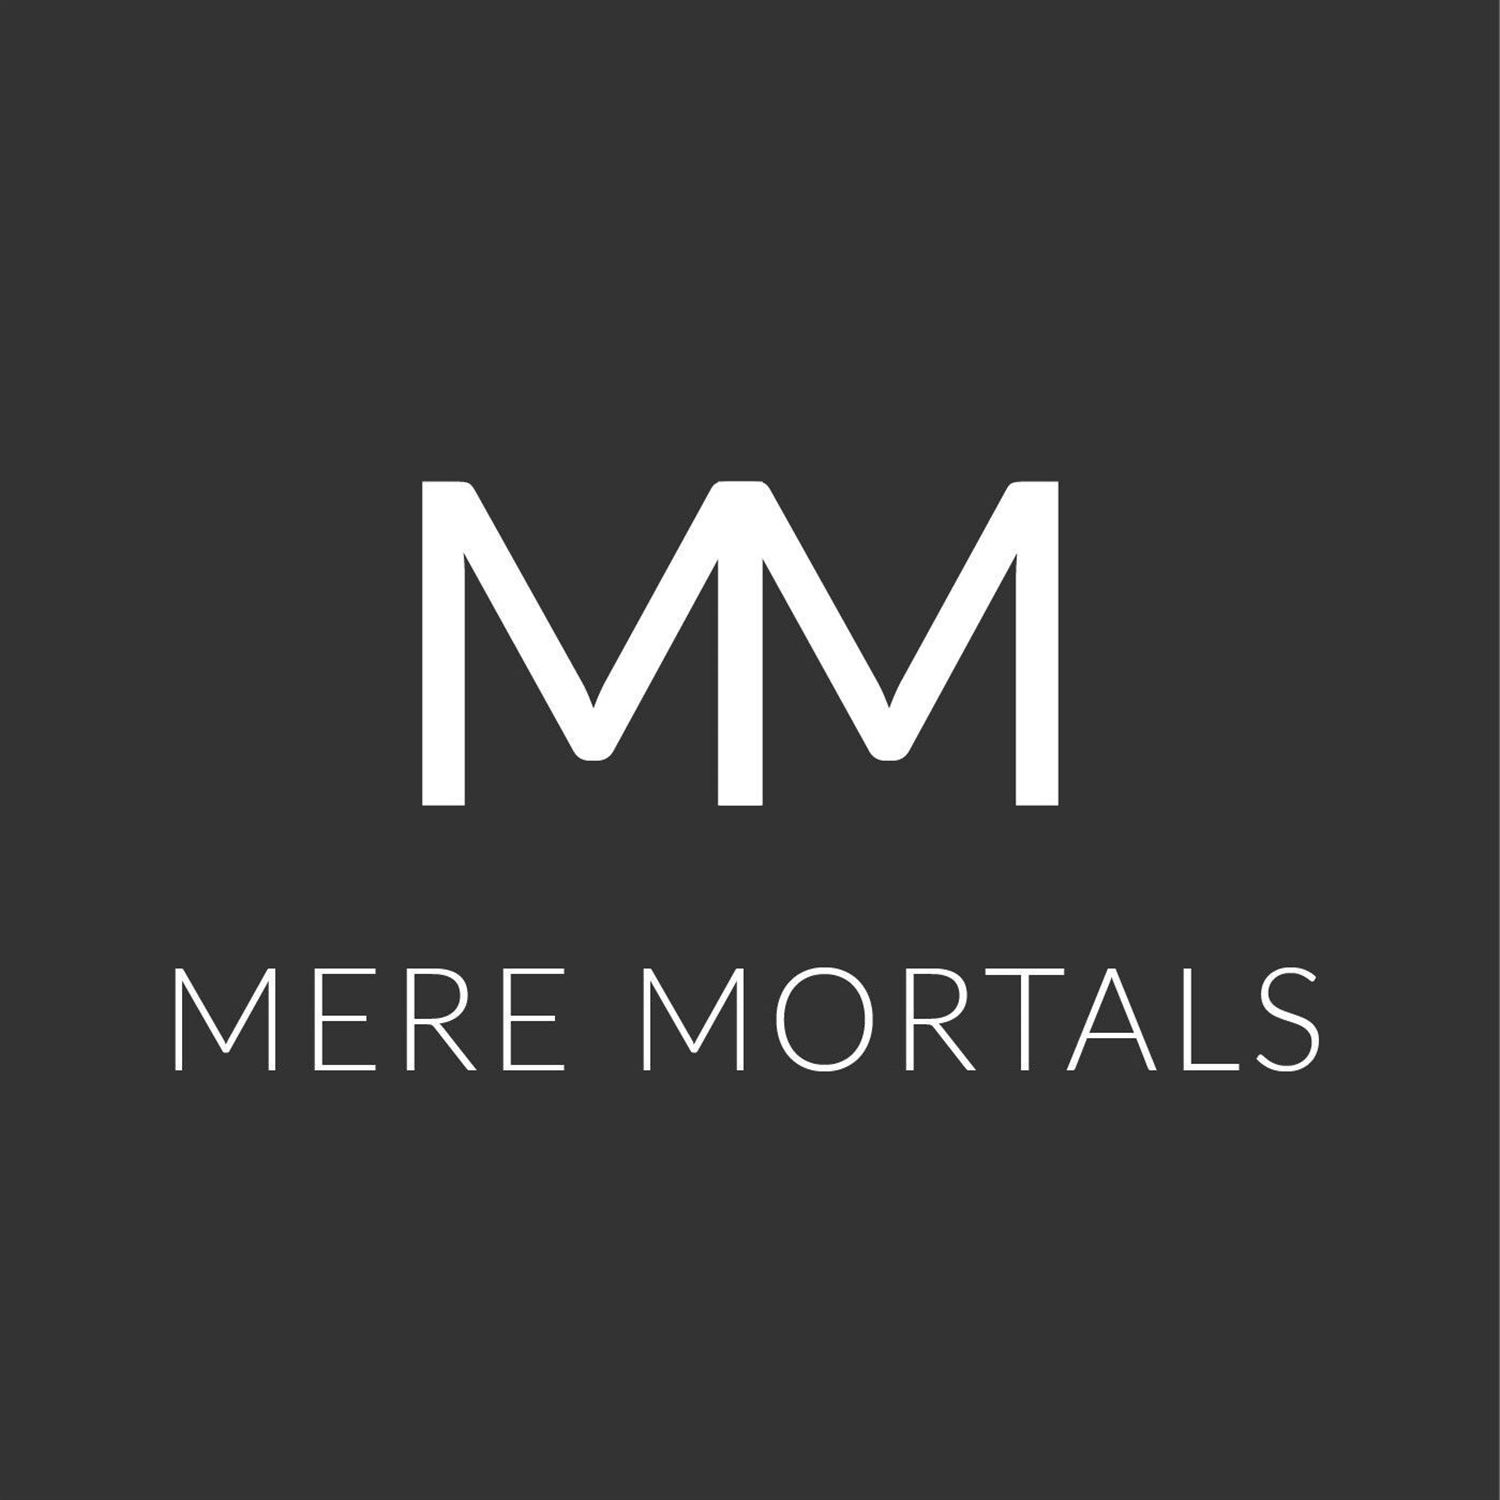 The Ethics of Pain Management (Mere Mortals Episode #57 - Pain)